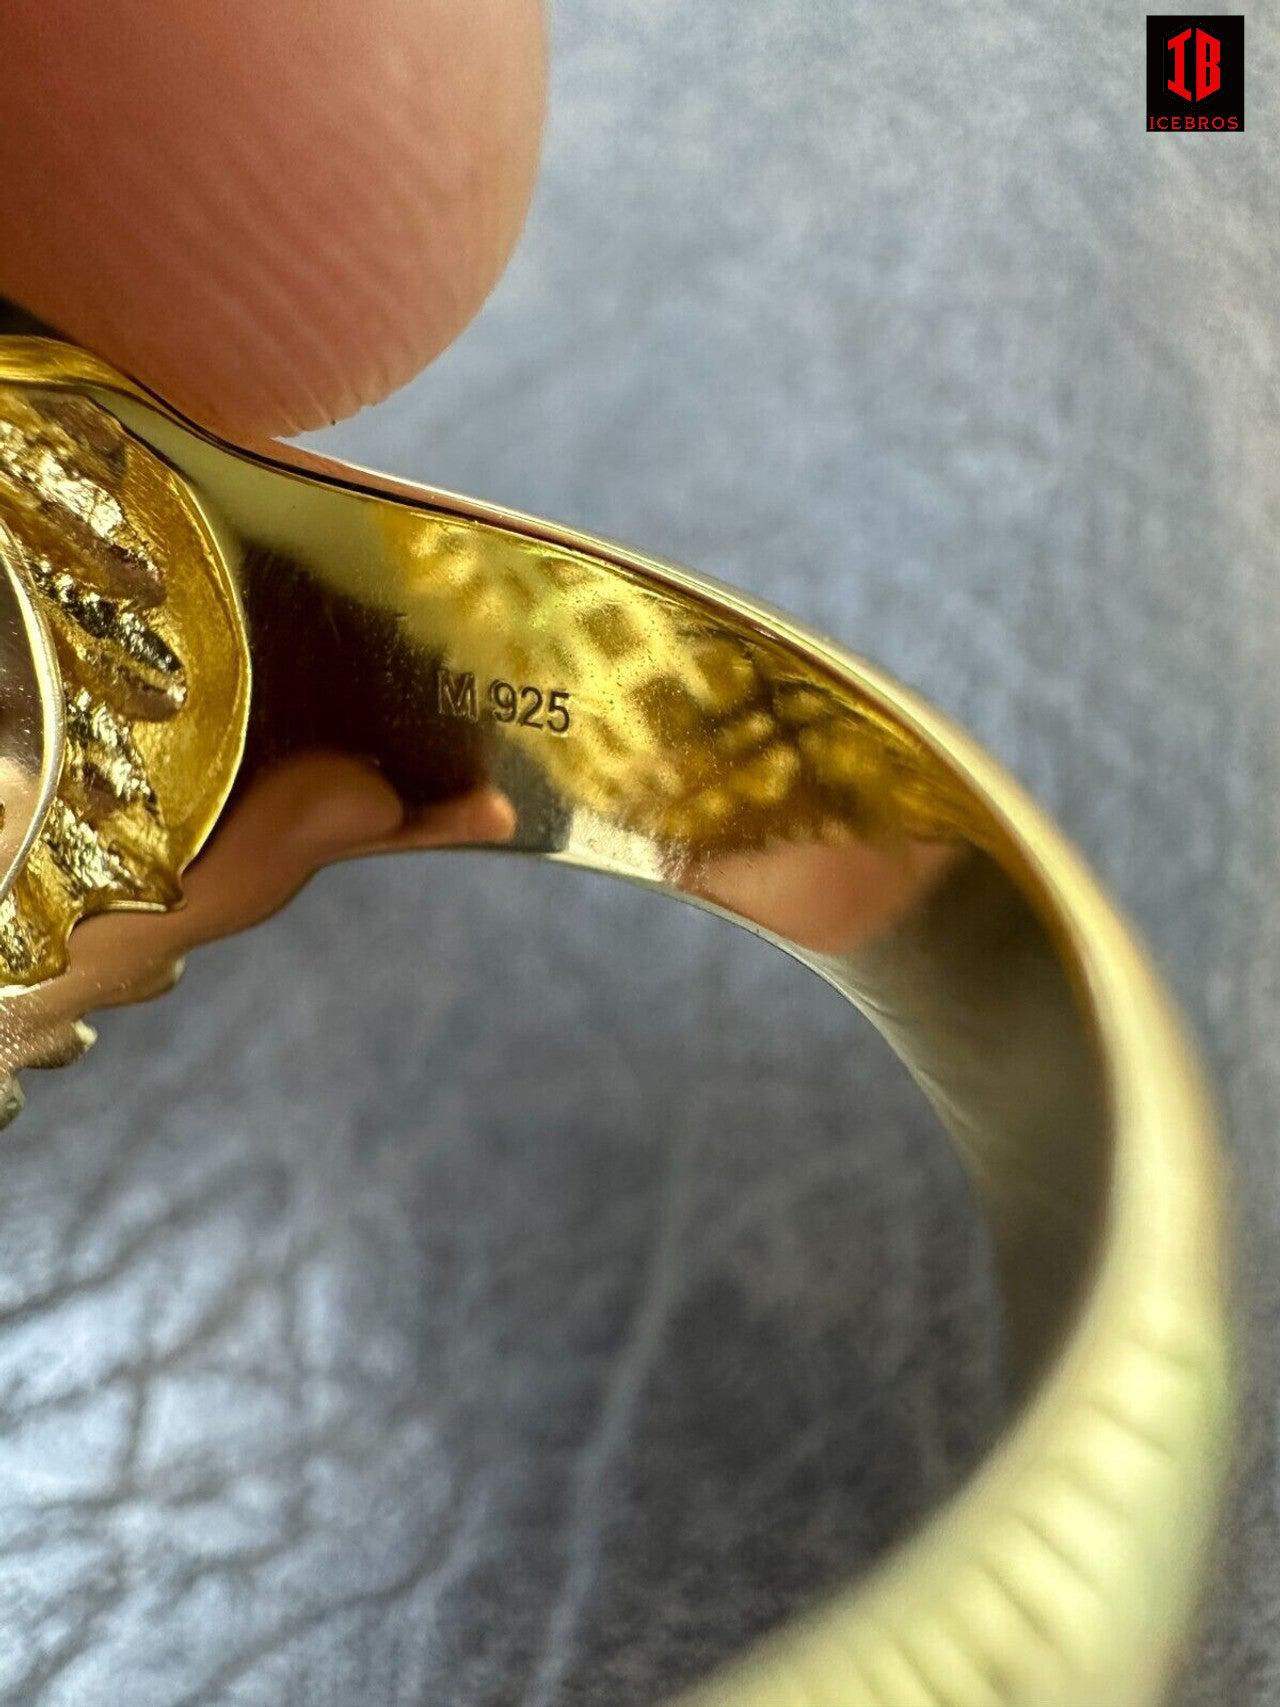 Lion W. Moissanite Baguette Crown 3D Mens Ring - 14k Gold Over Real 925 Silver